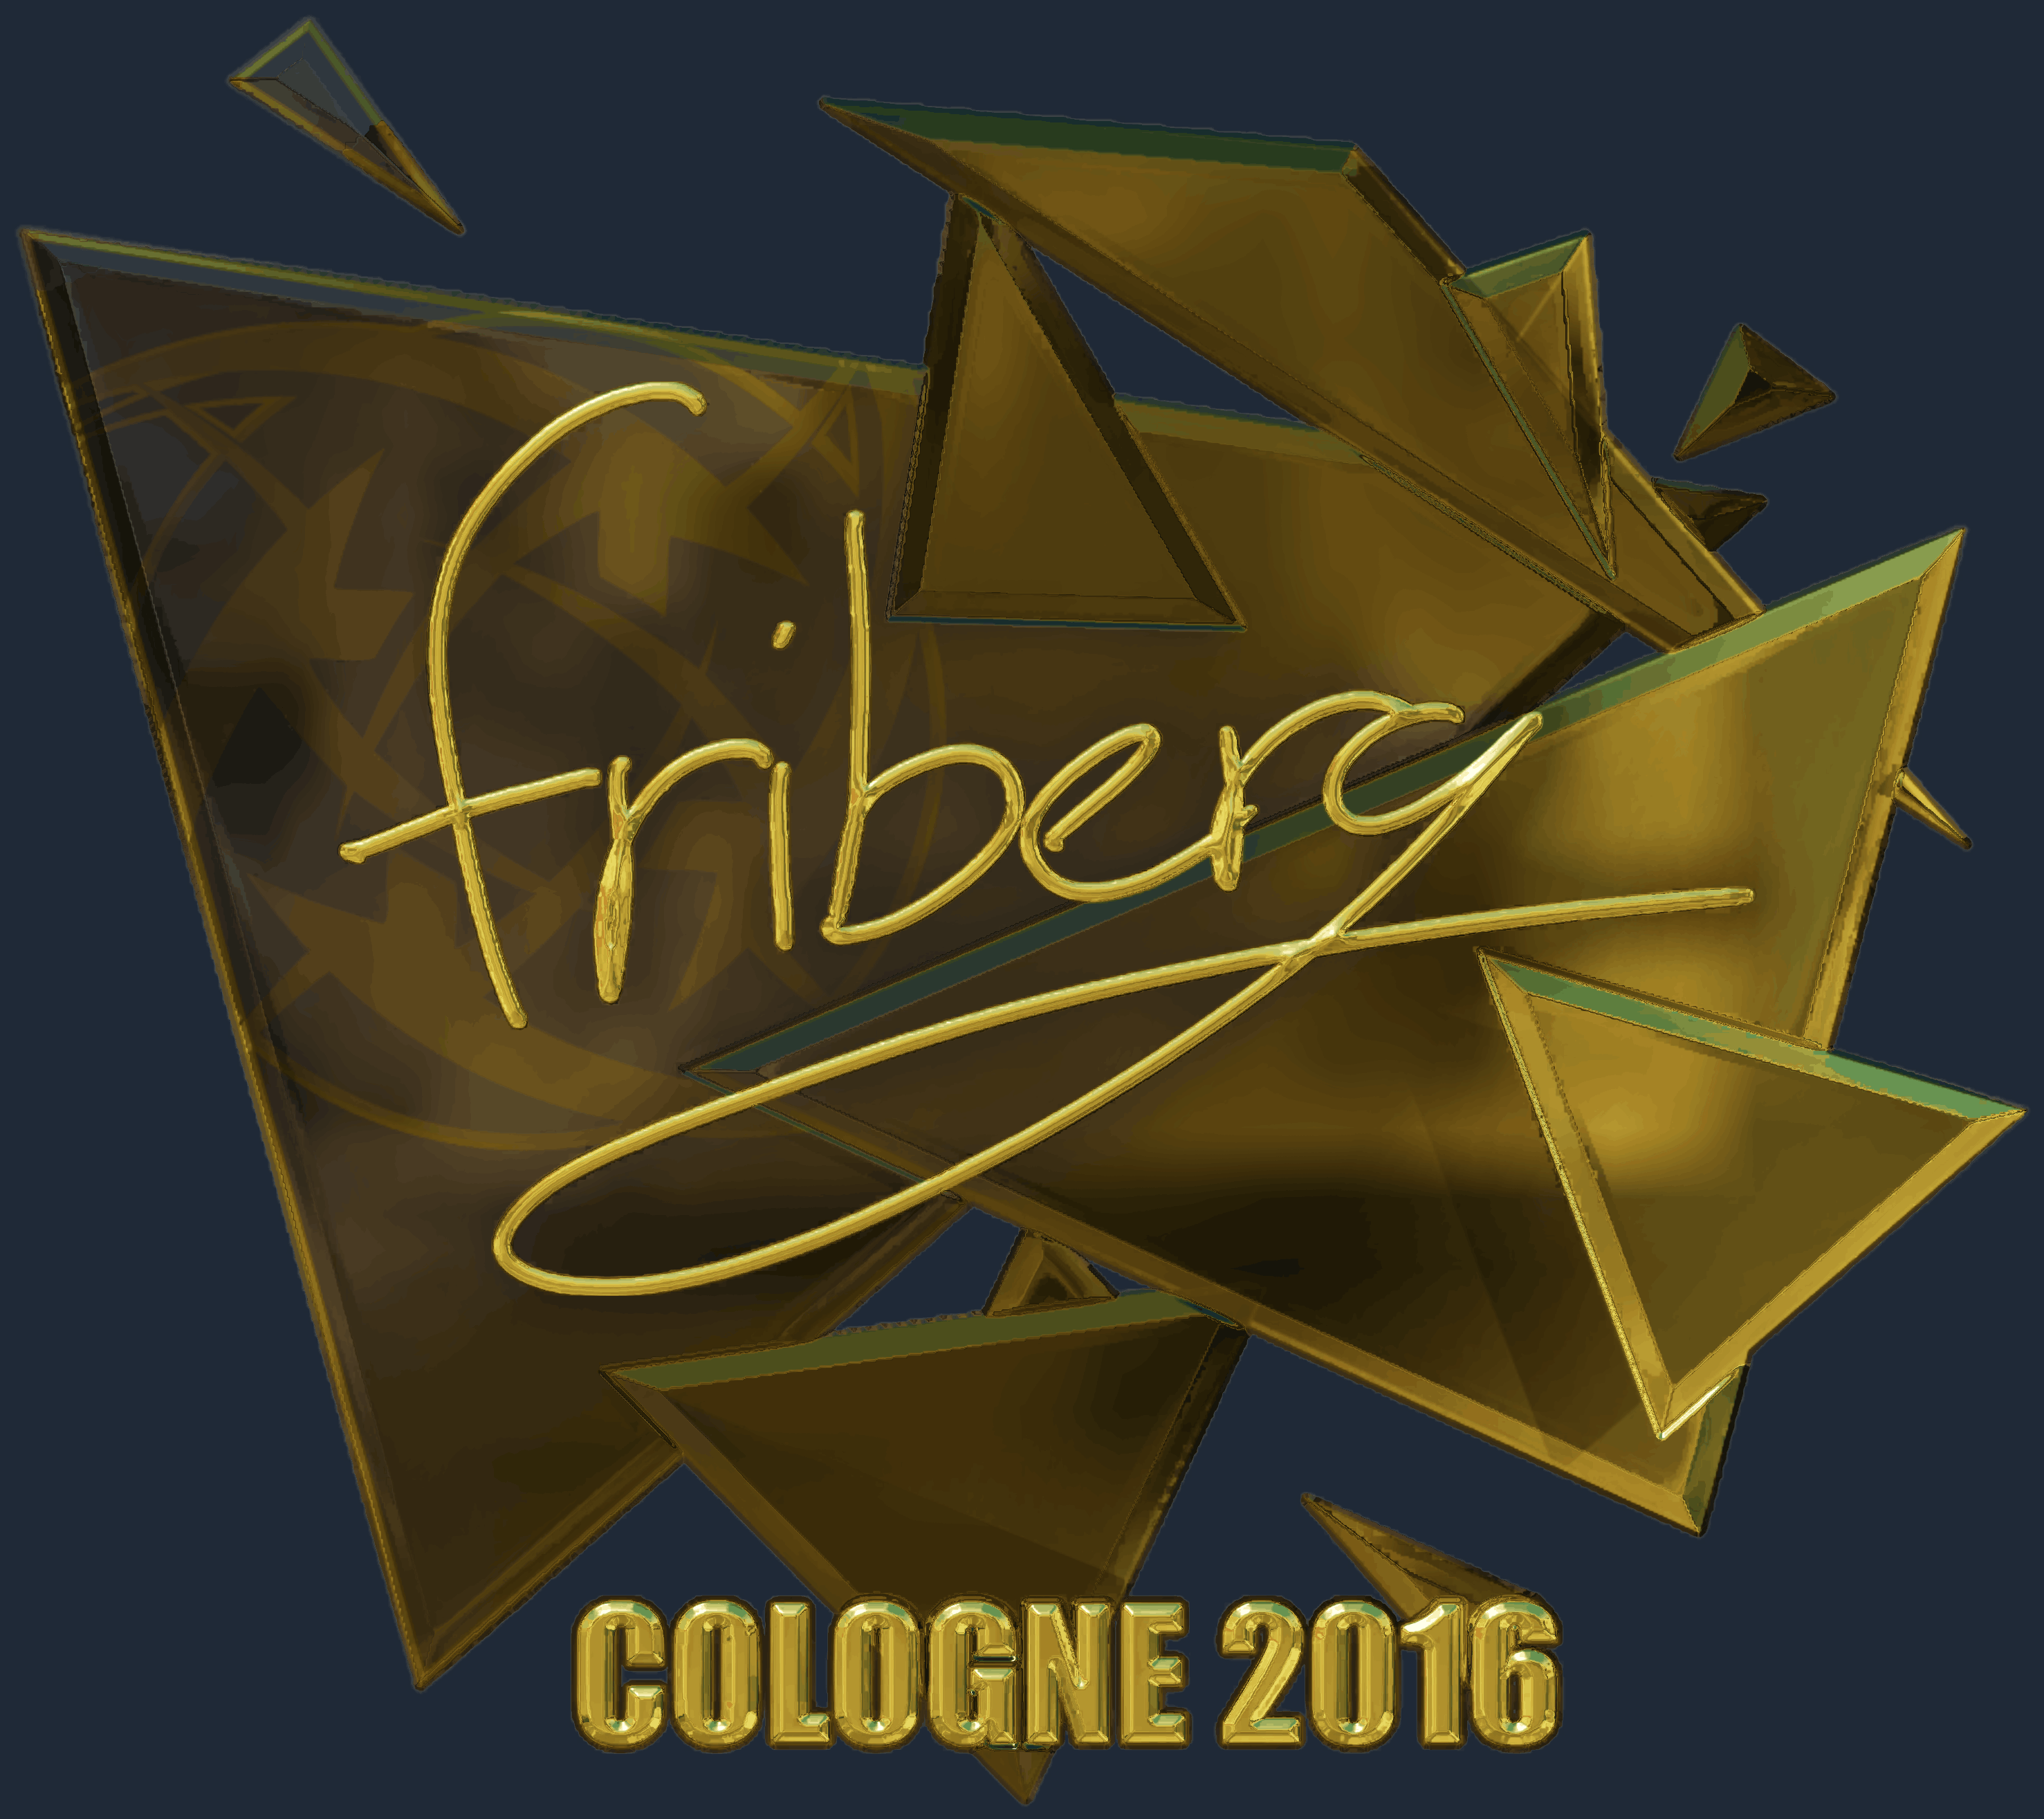 Sticker | friberg (Gold) | Cologne 2016 Screenshot